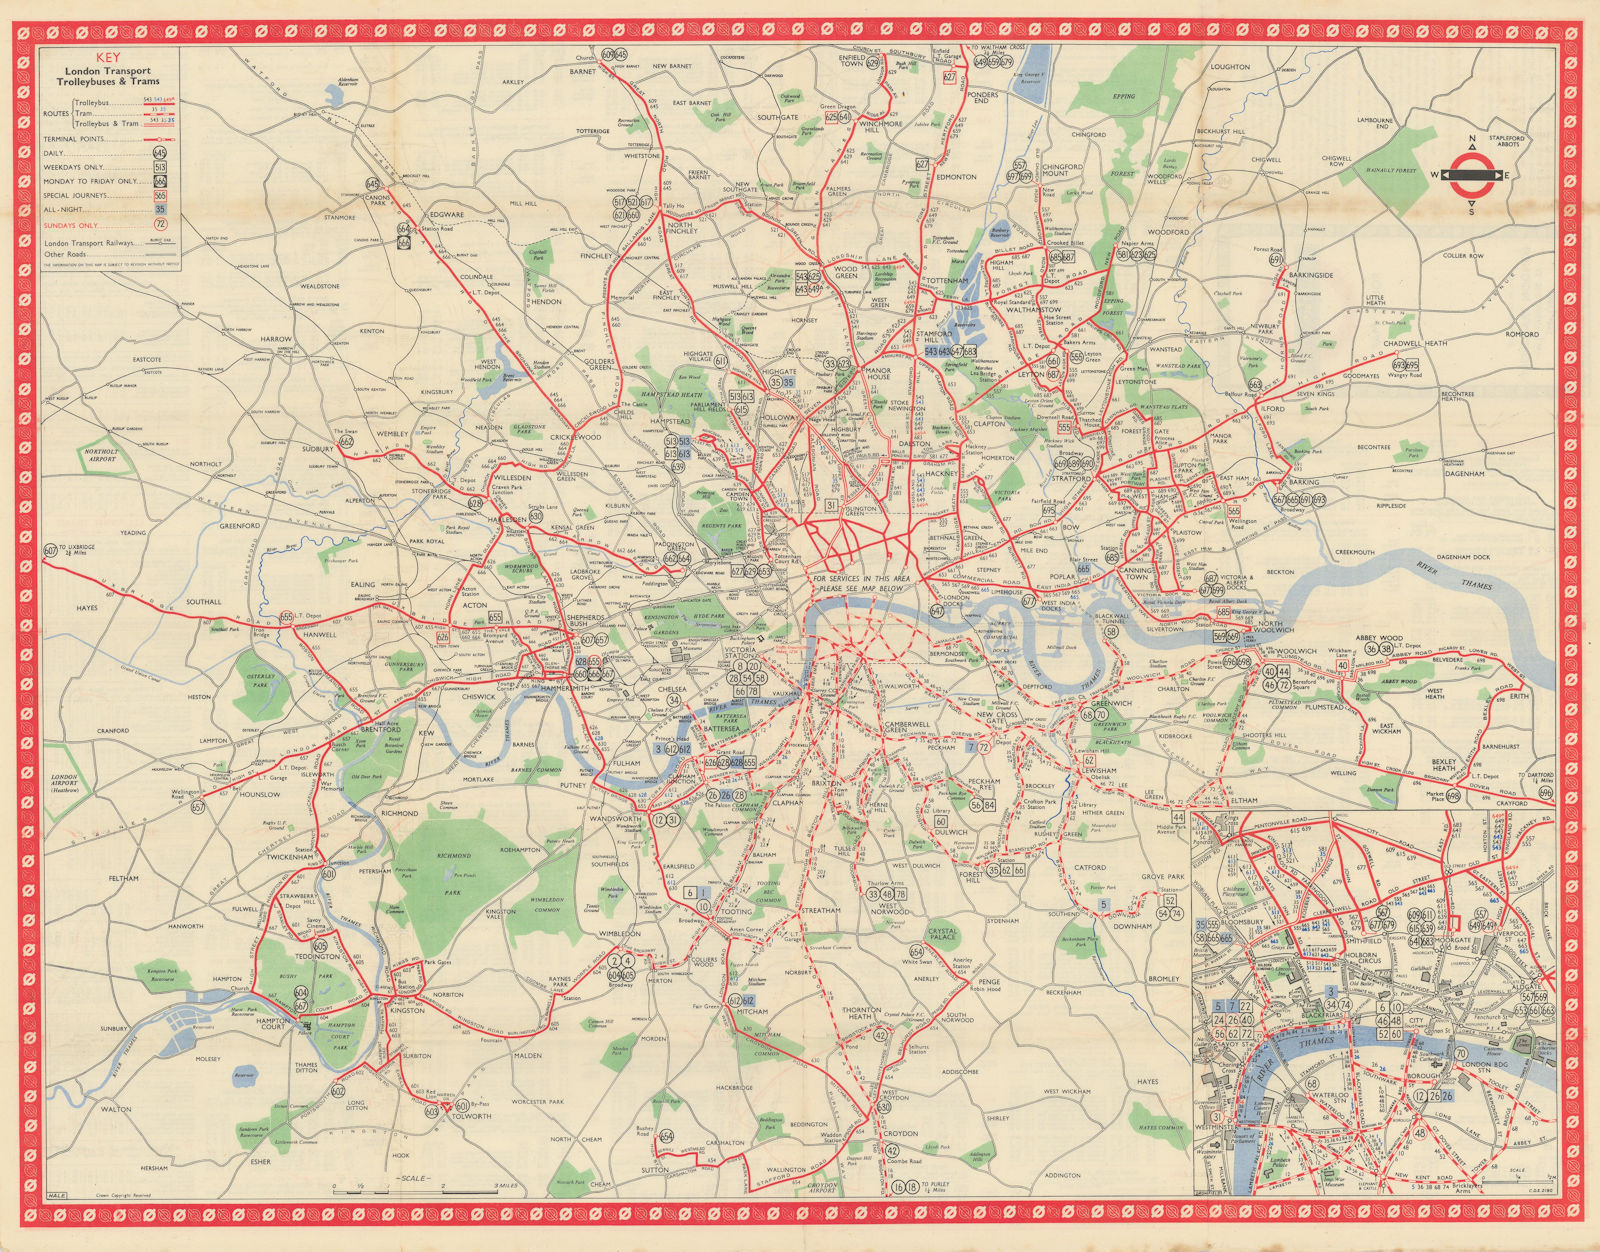 London Transport Trolleybus & Tram route map. 650. HALE January 1950 old